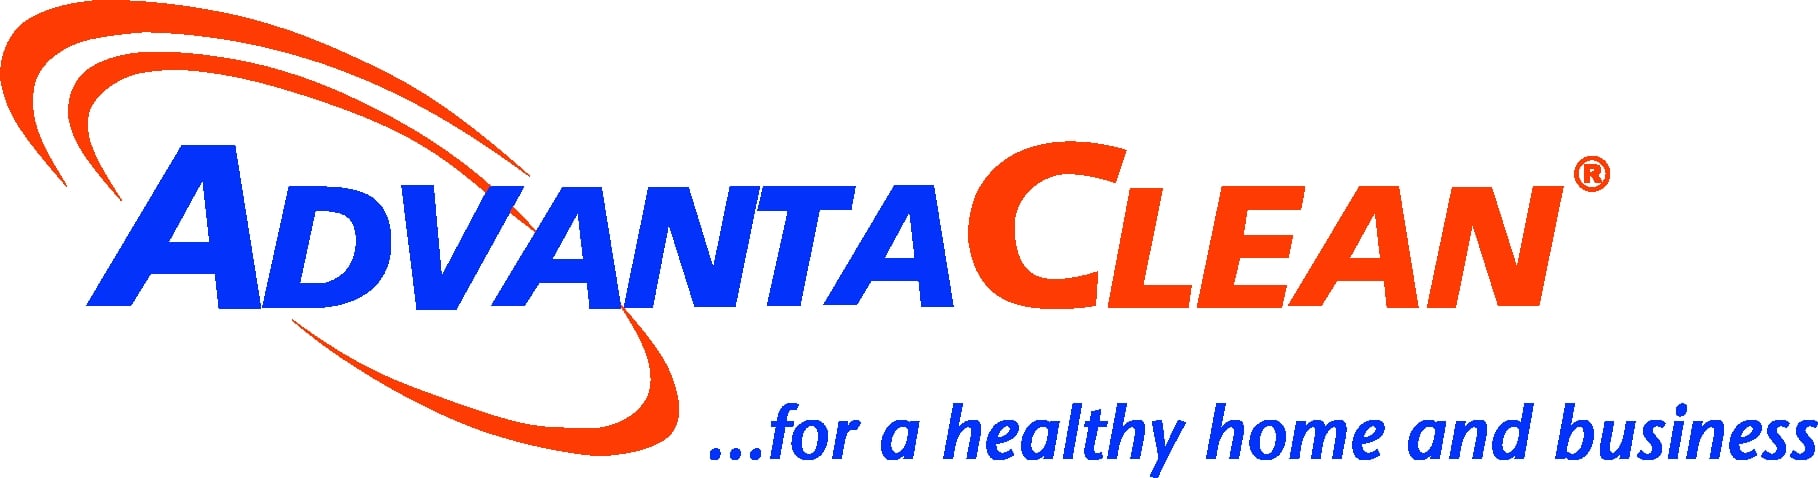 AdvantaClean of Kansas City Logo